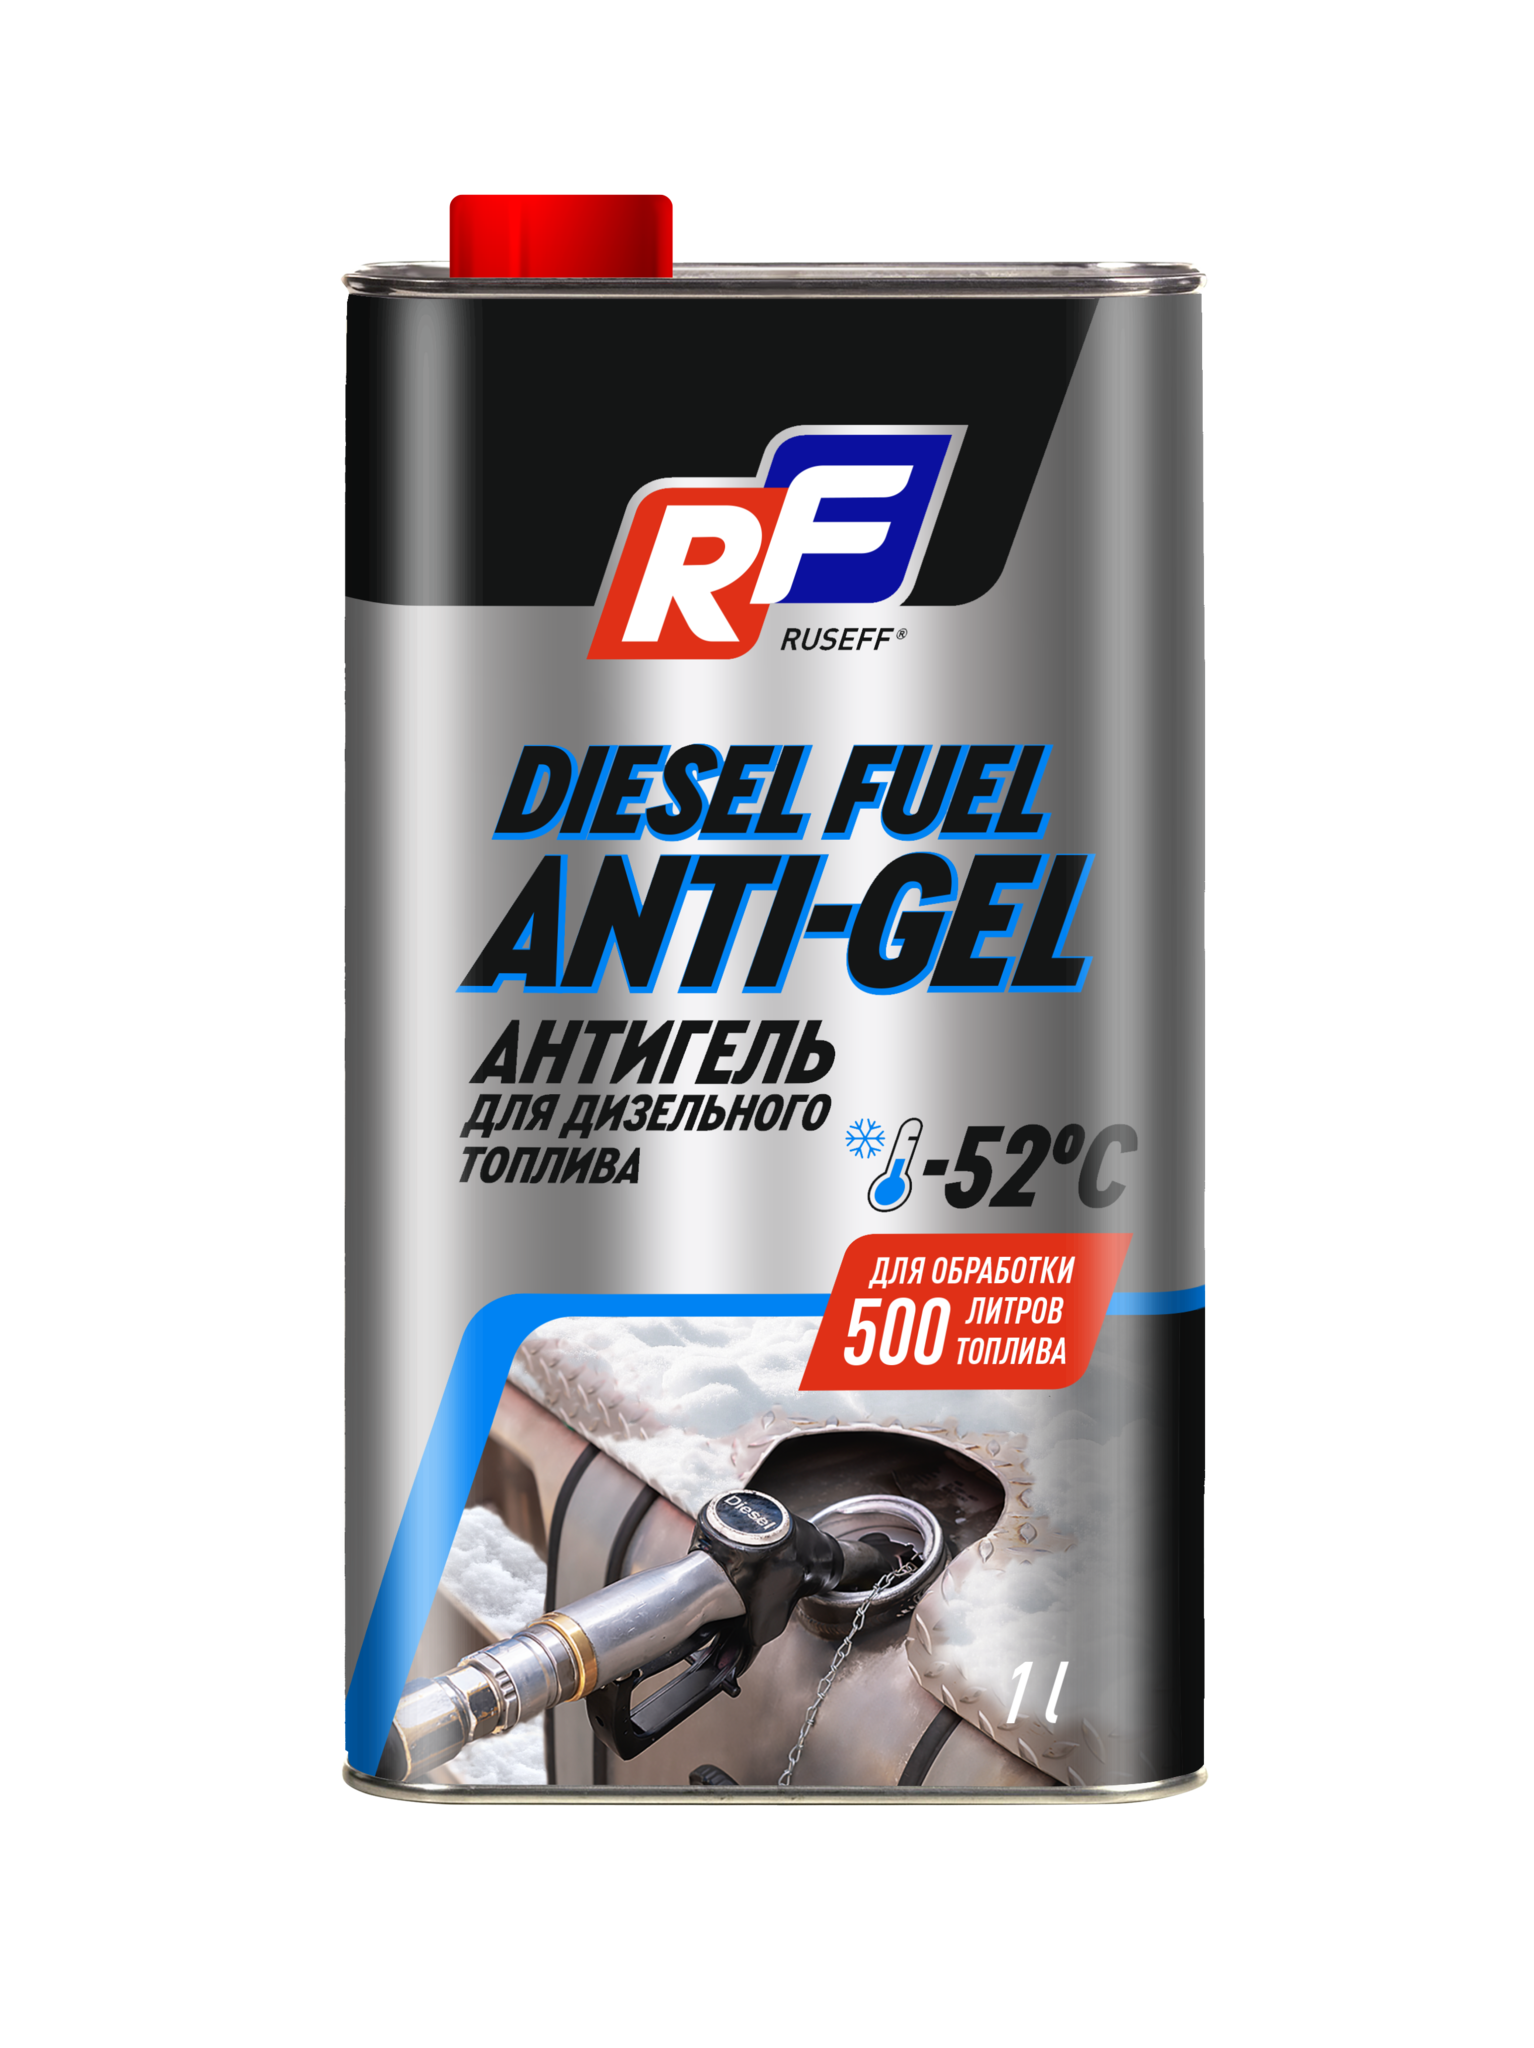 Ruseff Diesel Fuel Anti-Gel  Антигель для дизельного топлива